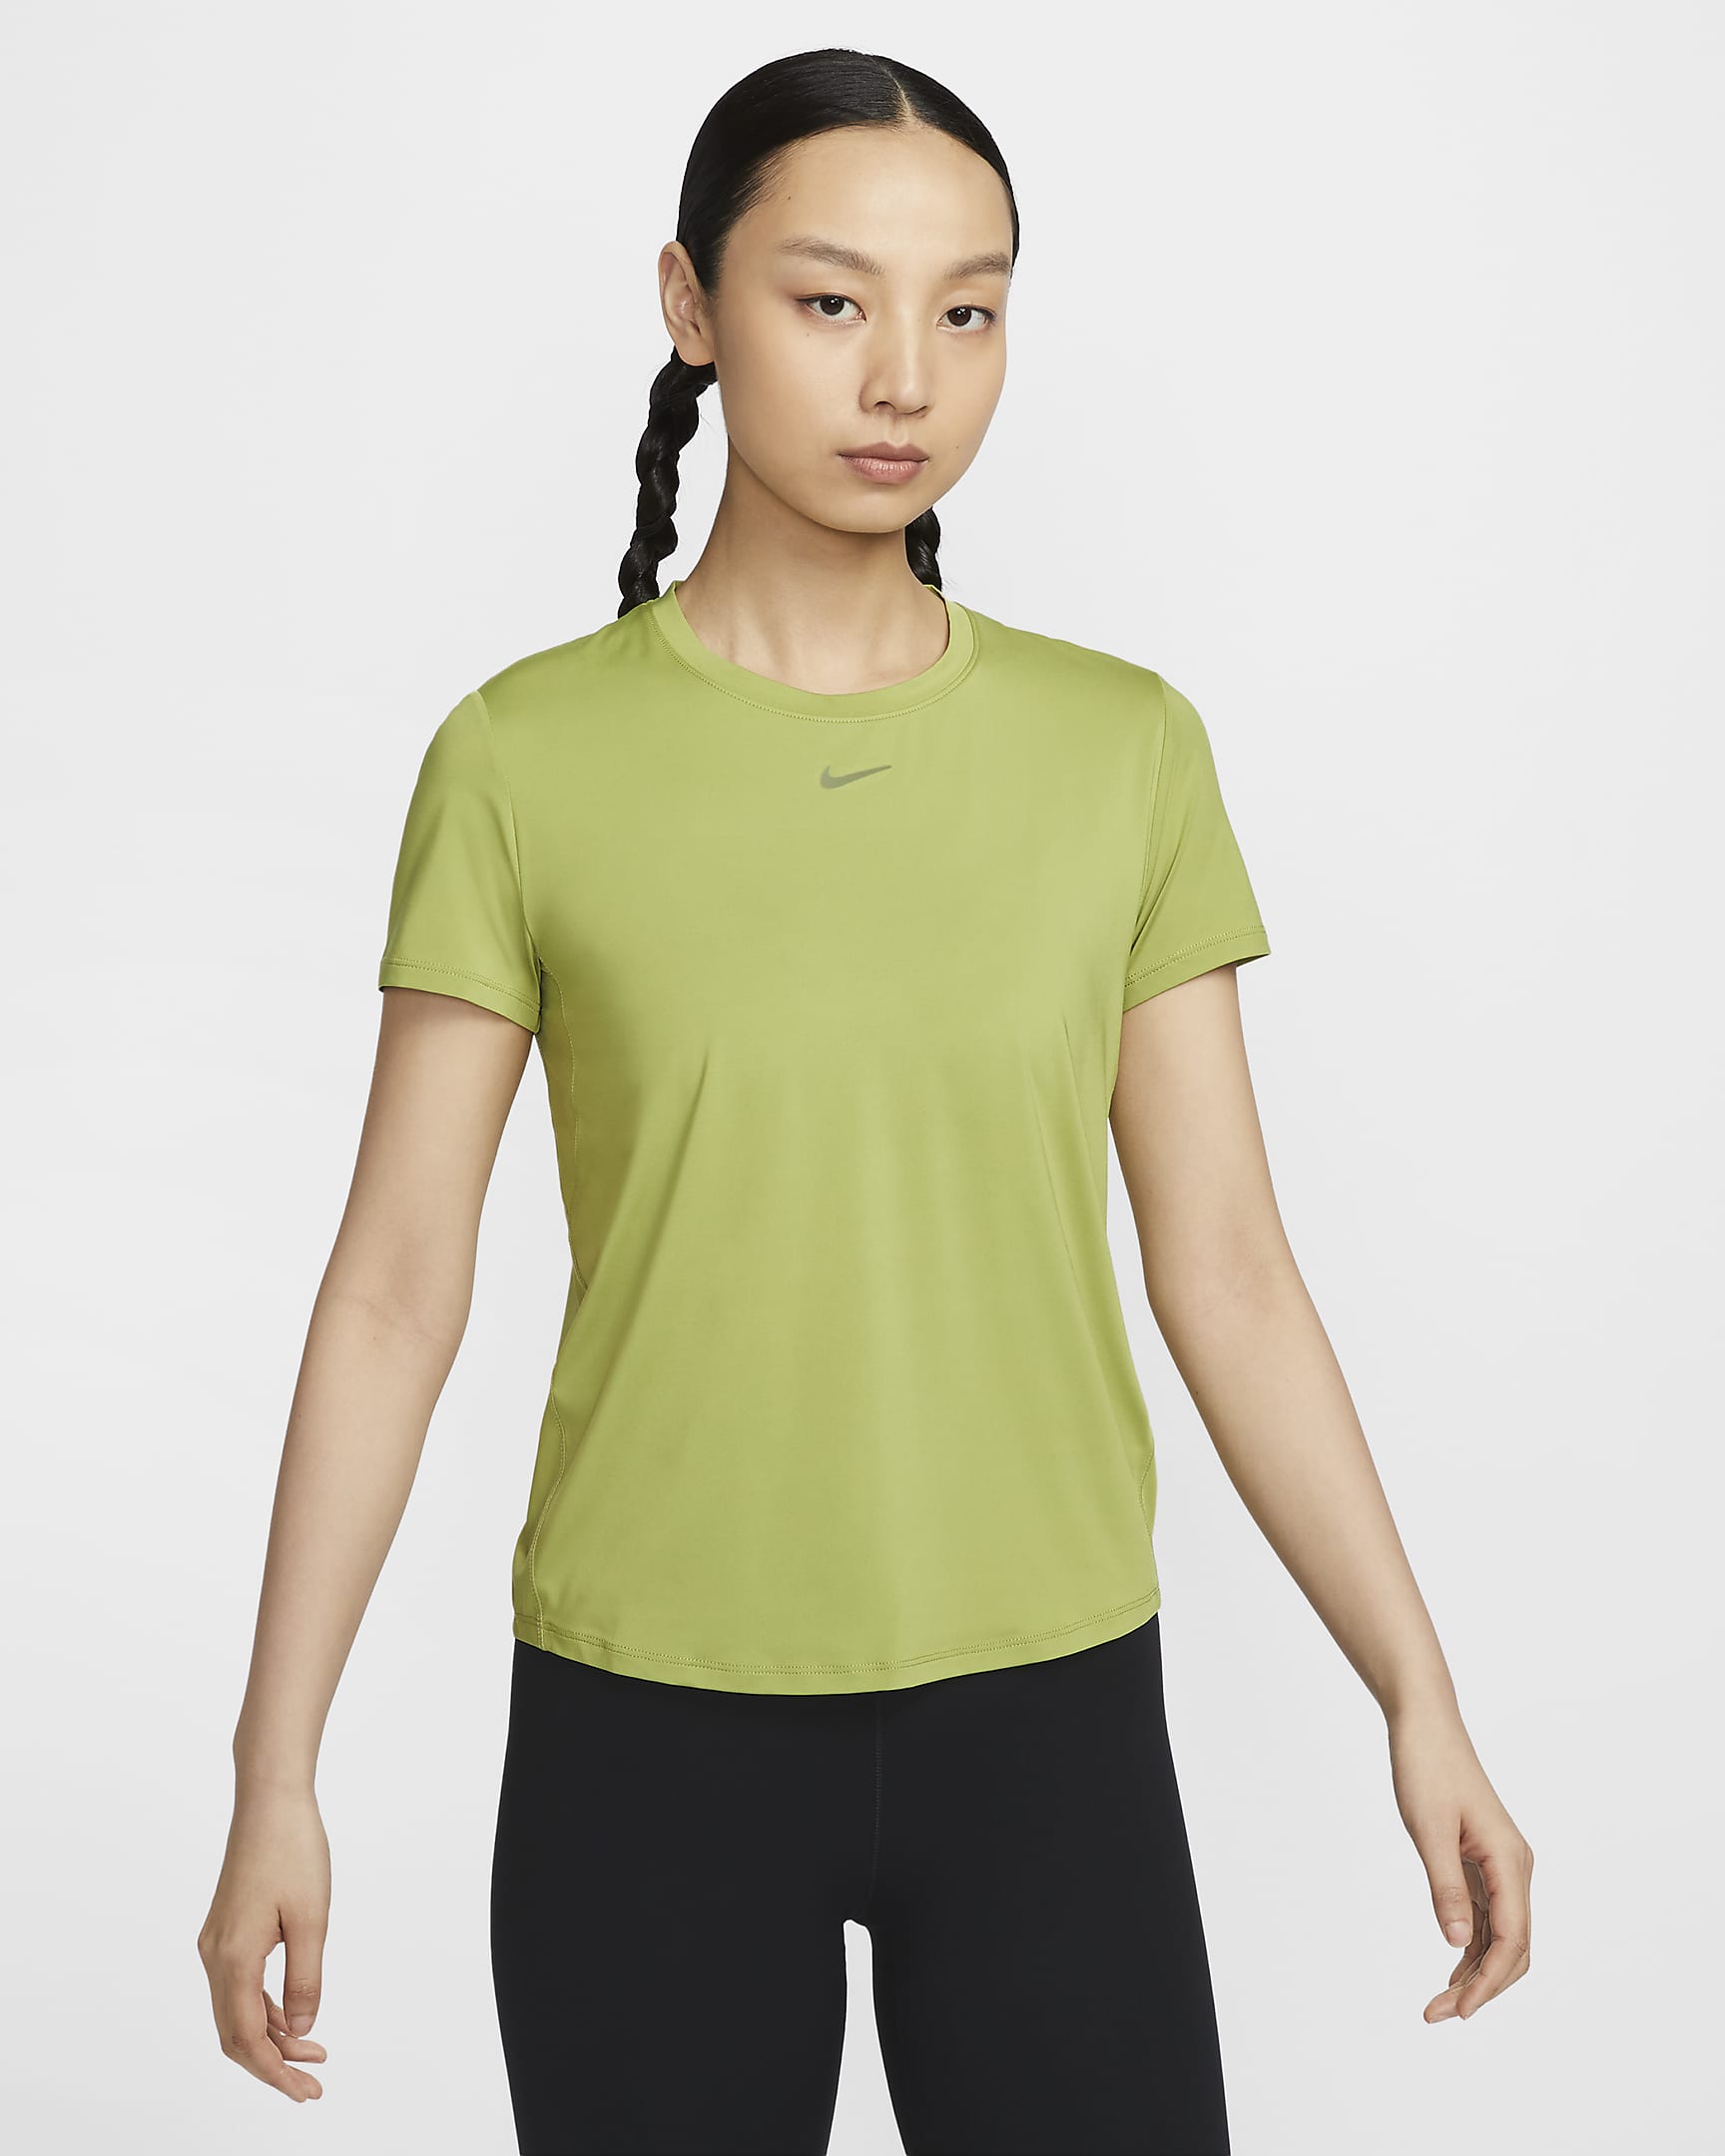 Nike One Classic Women's Dri-FIT Short-Sleeve Top. Nike SG